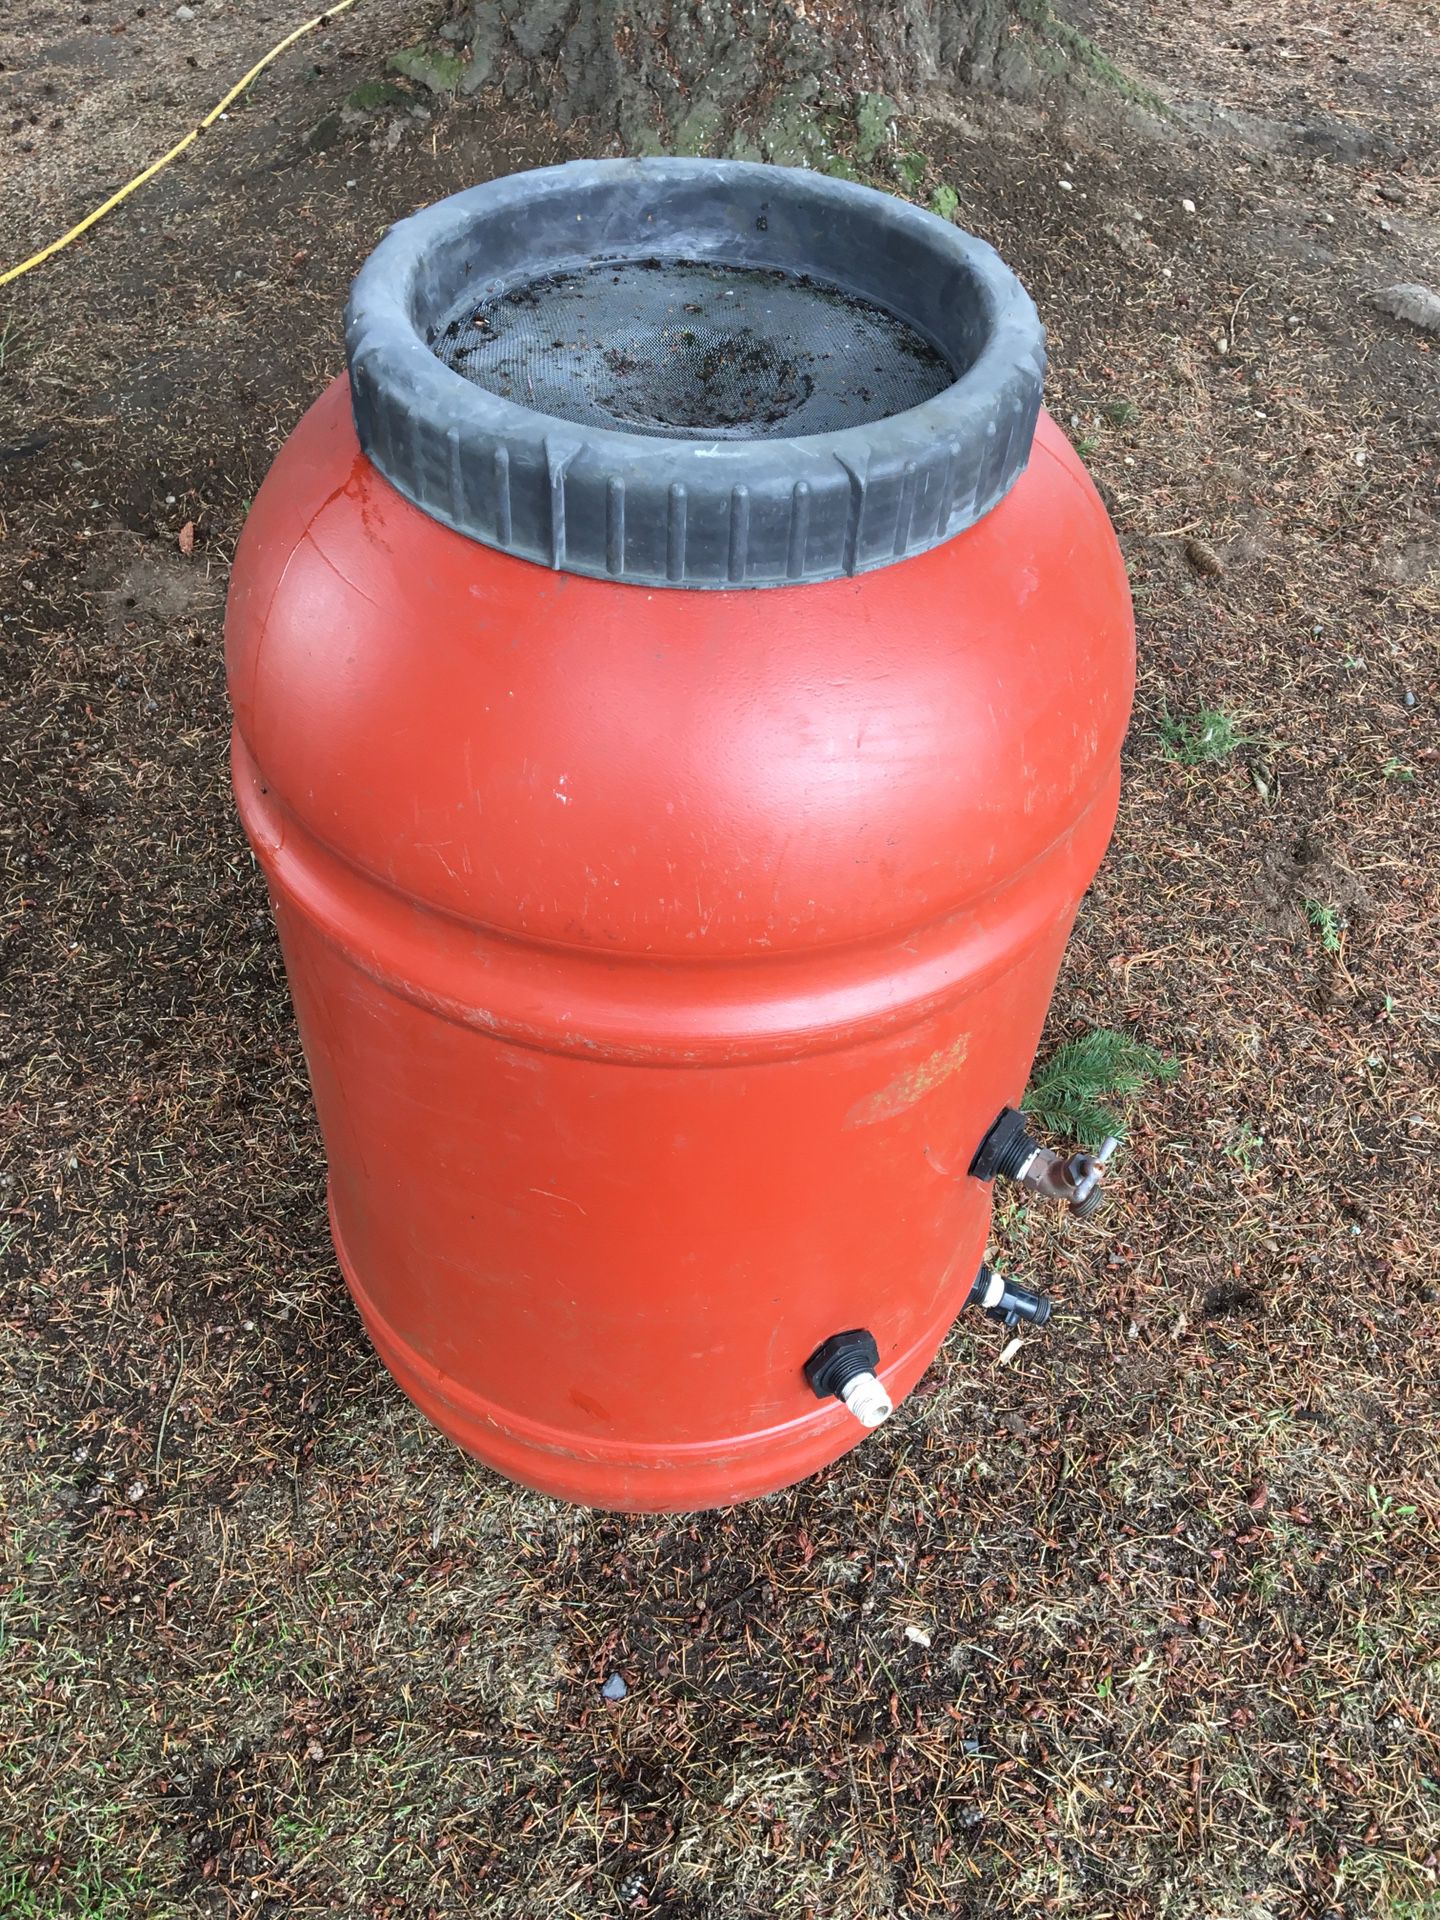 Nice rain barrel